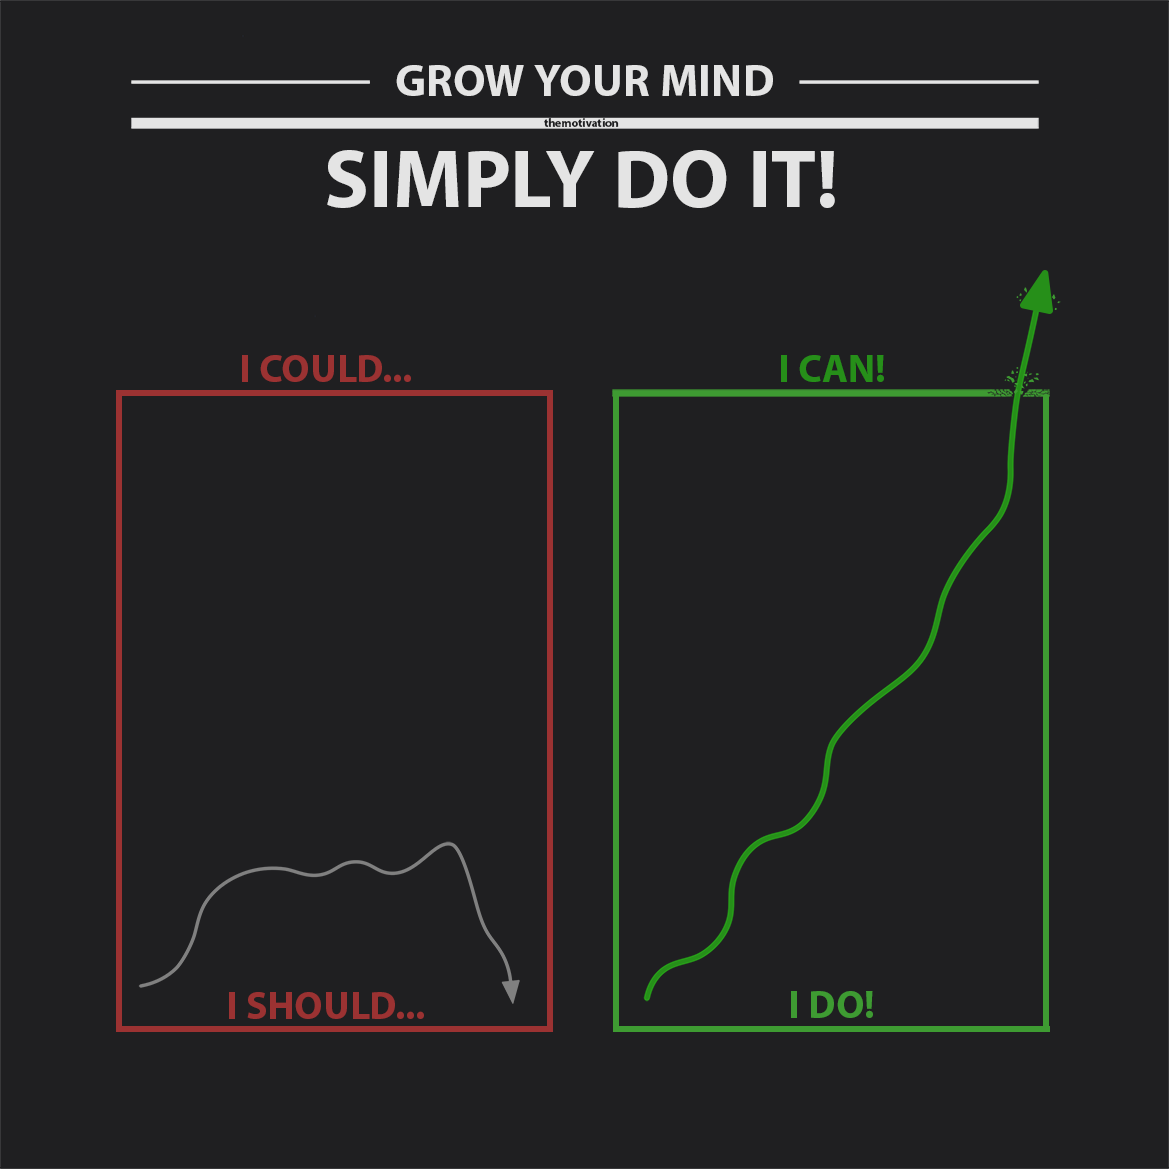 motivationsbild-wandbild-kaufen-mindset-erfolg-GROW-YOUR-MIND-vorschaubild-Simply-Do-It-themotivation.de